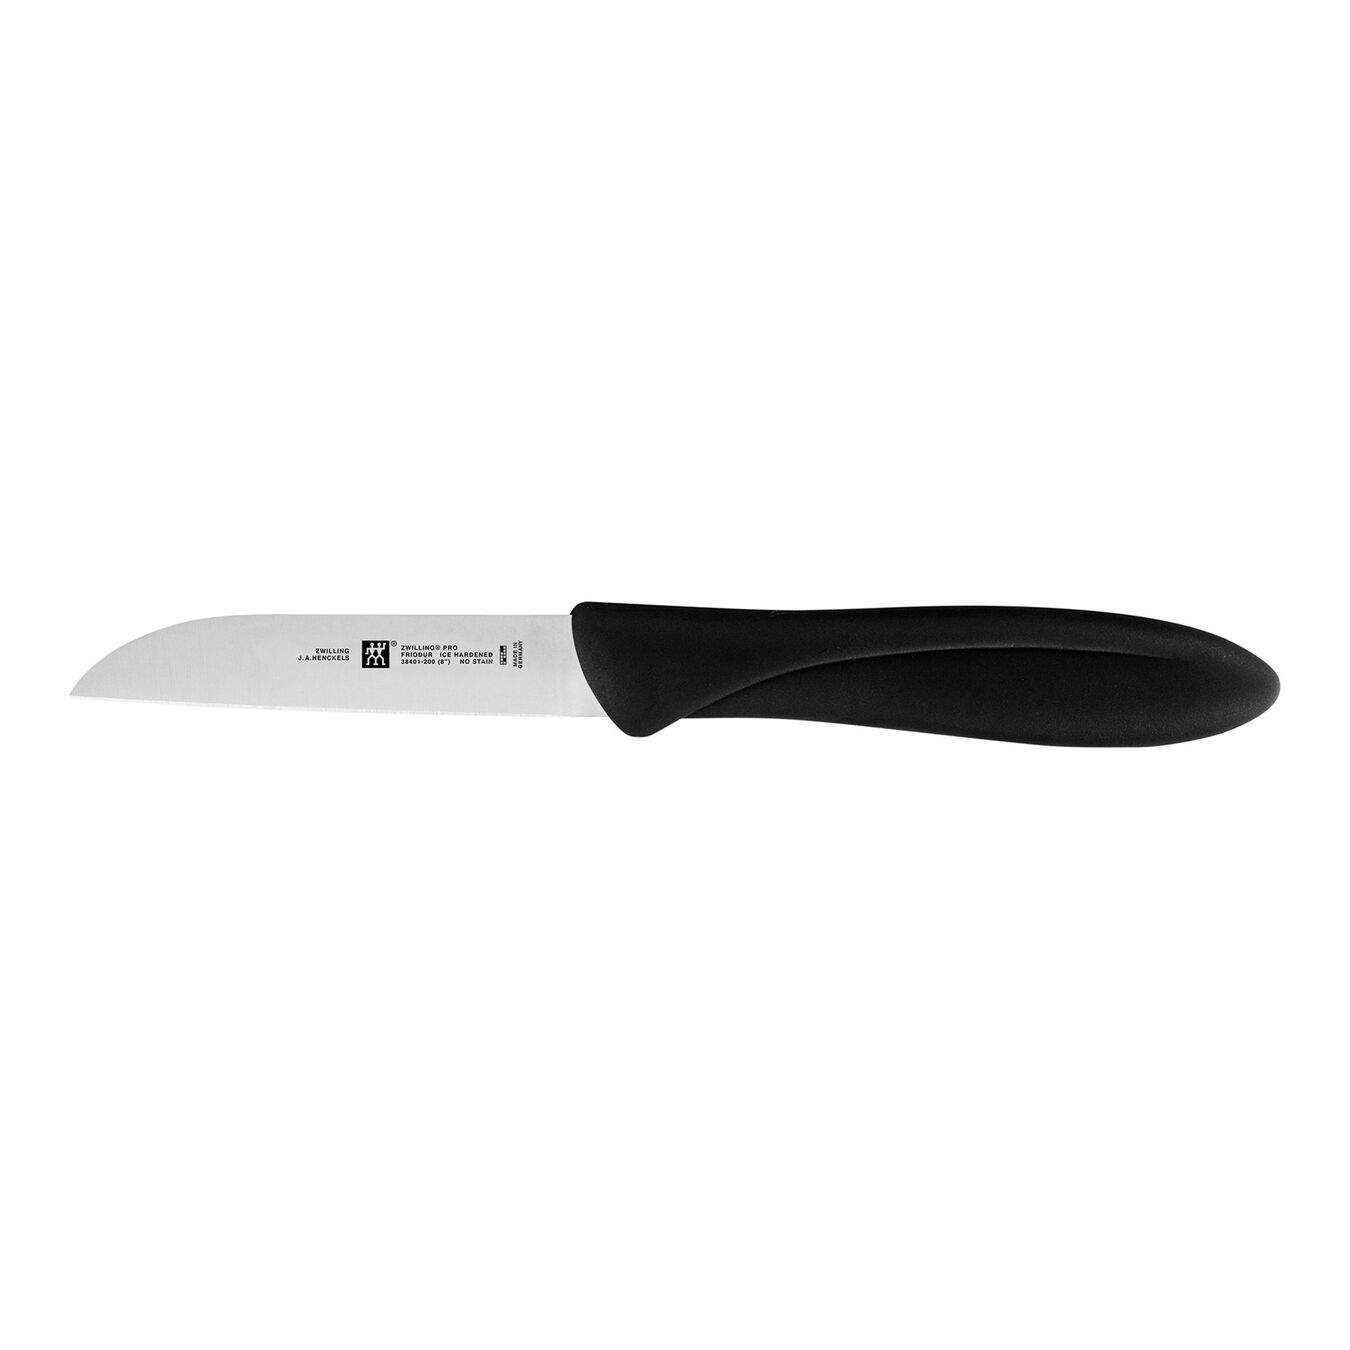 3-inch, Kudamono Knife - Black Handle,,large 1